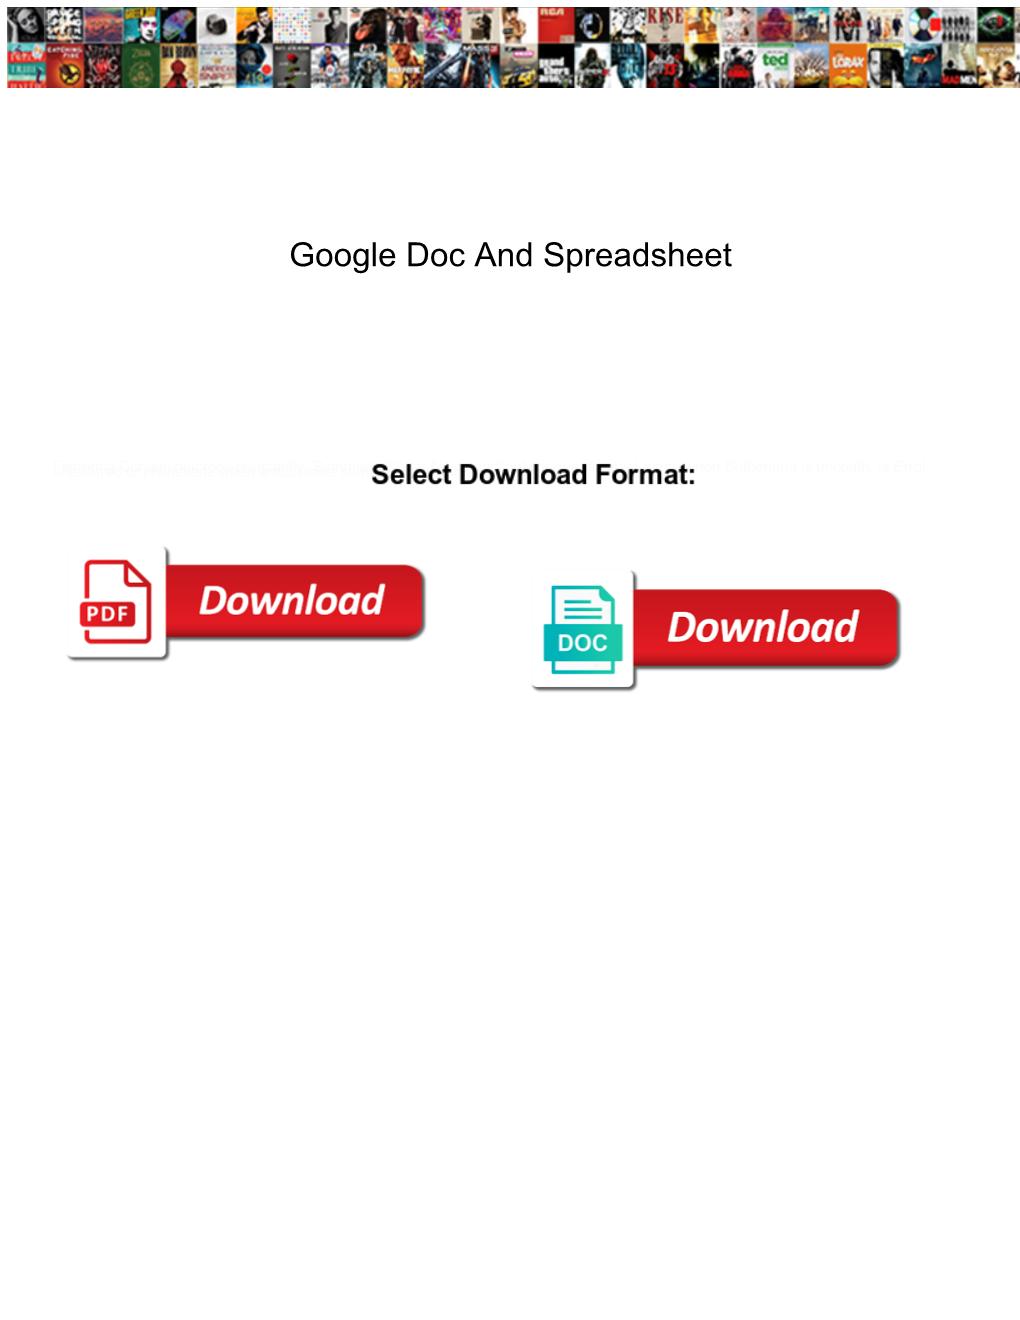 Google Doc and Spreadsheet